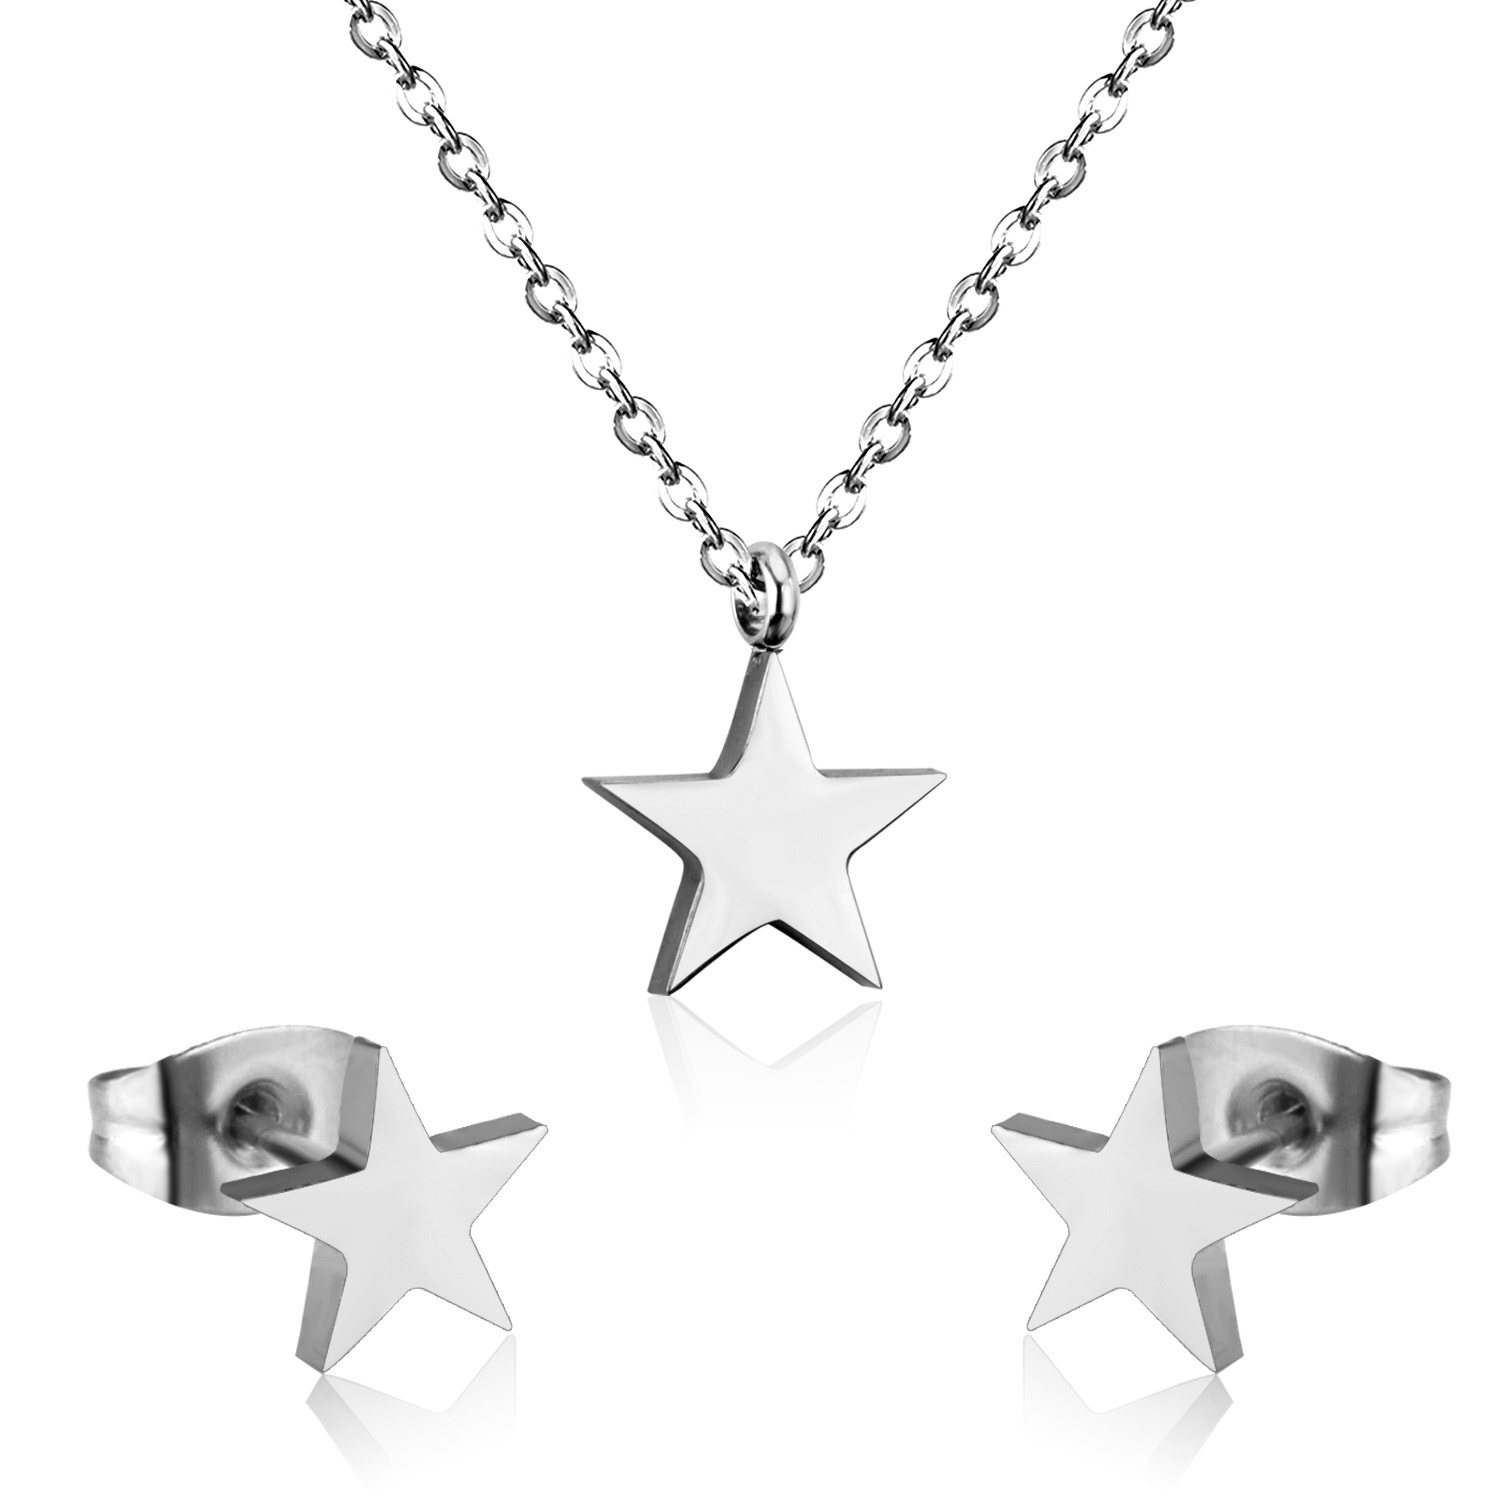 1:steel star